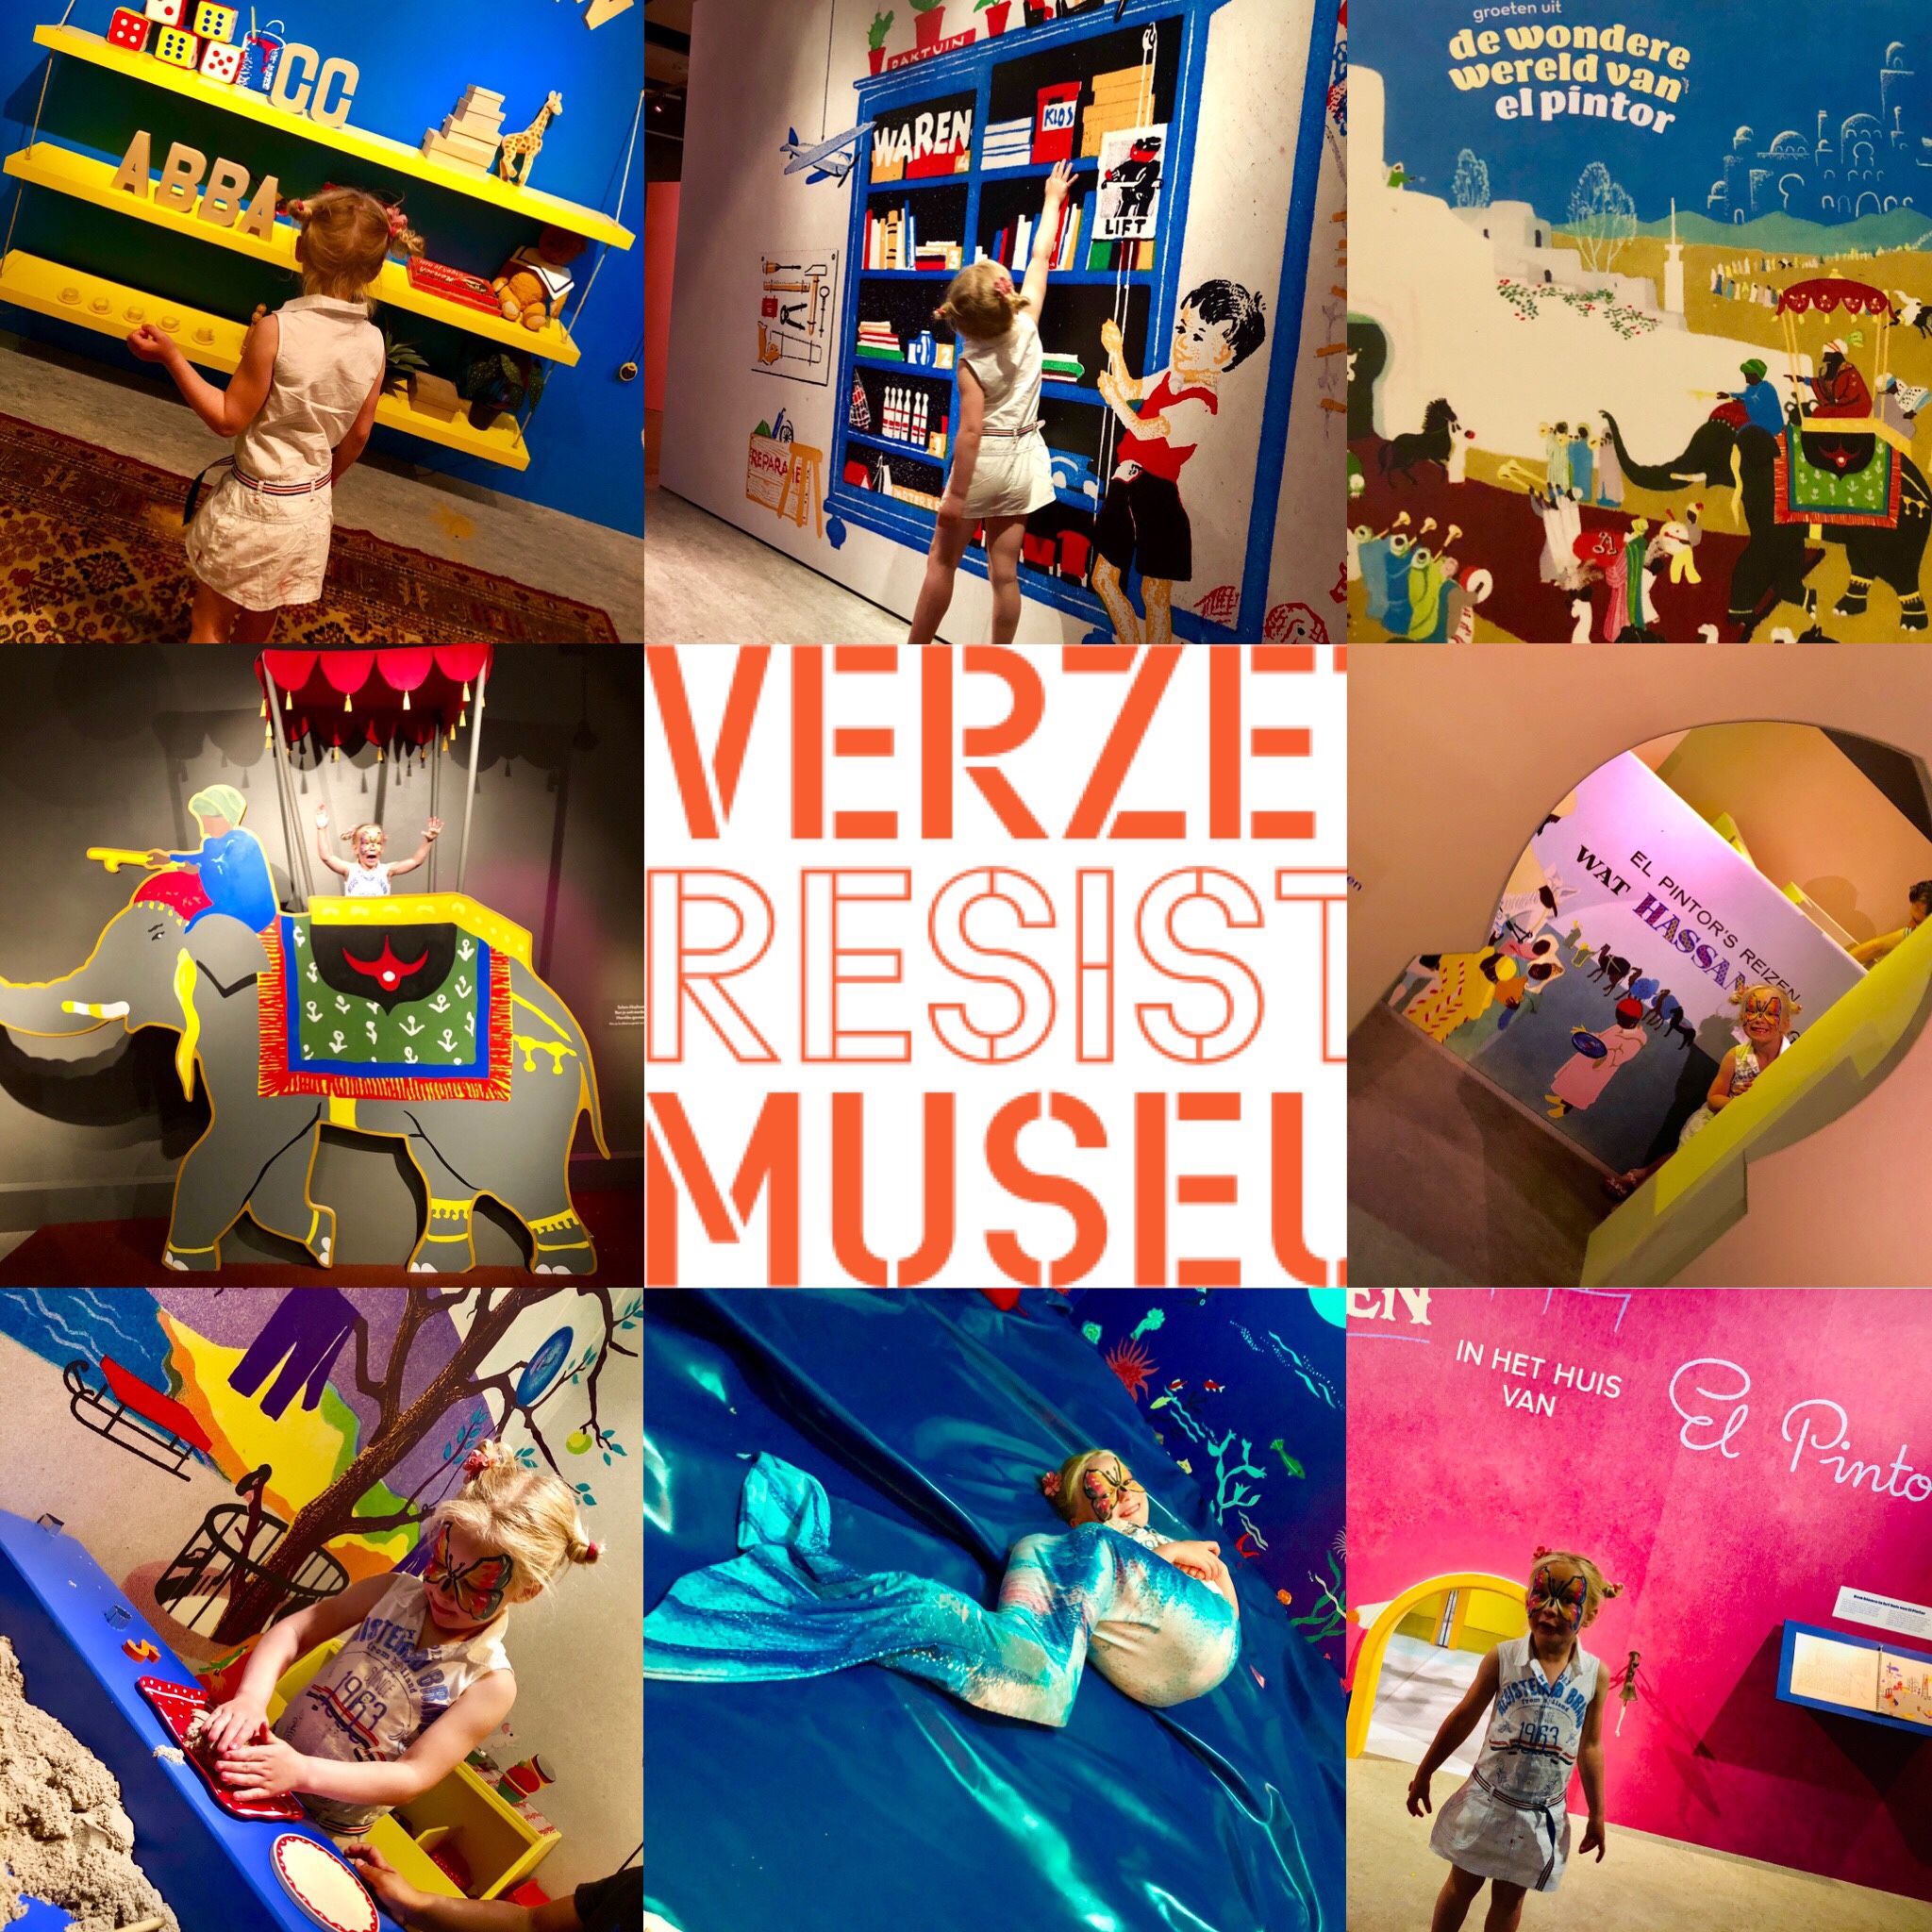 El Pintor, verzetsmuseum, amsterdam, oorlog, verzet